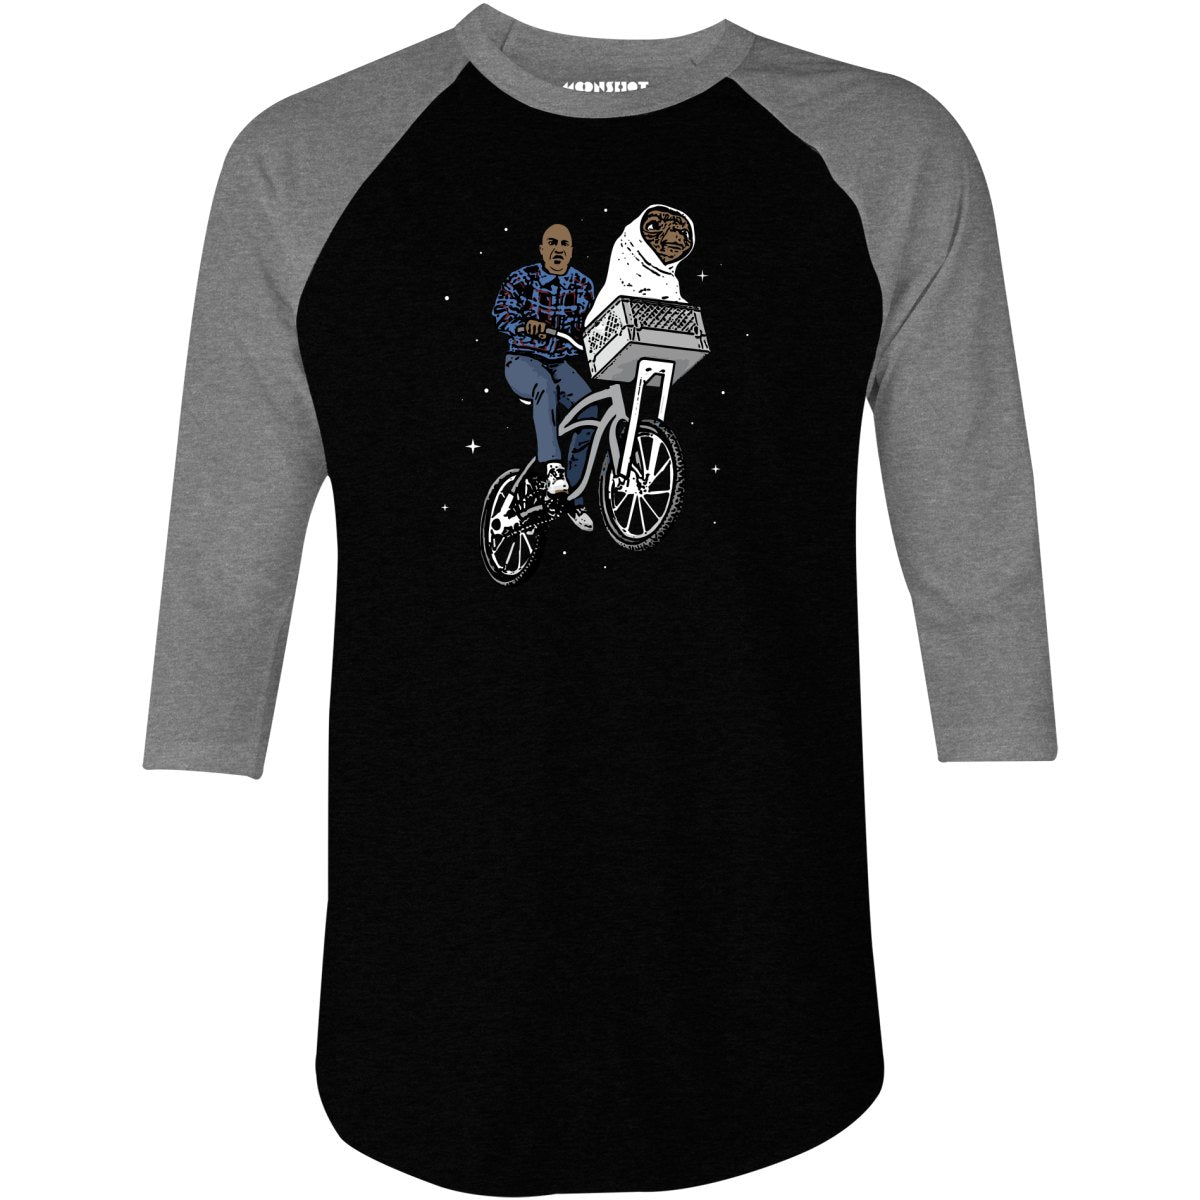 Deebo + Extra Terrestrial Bike Parody Mashup - 3/4 Sleeve Raglan T-Shirt